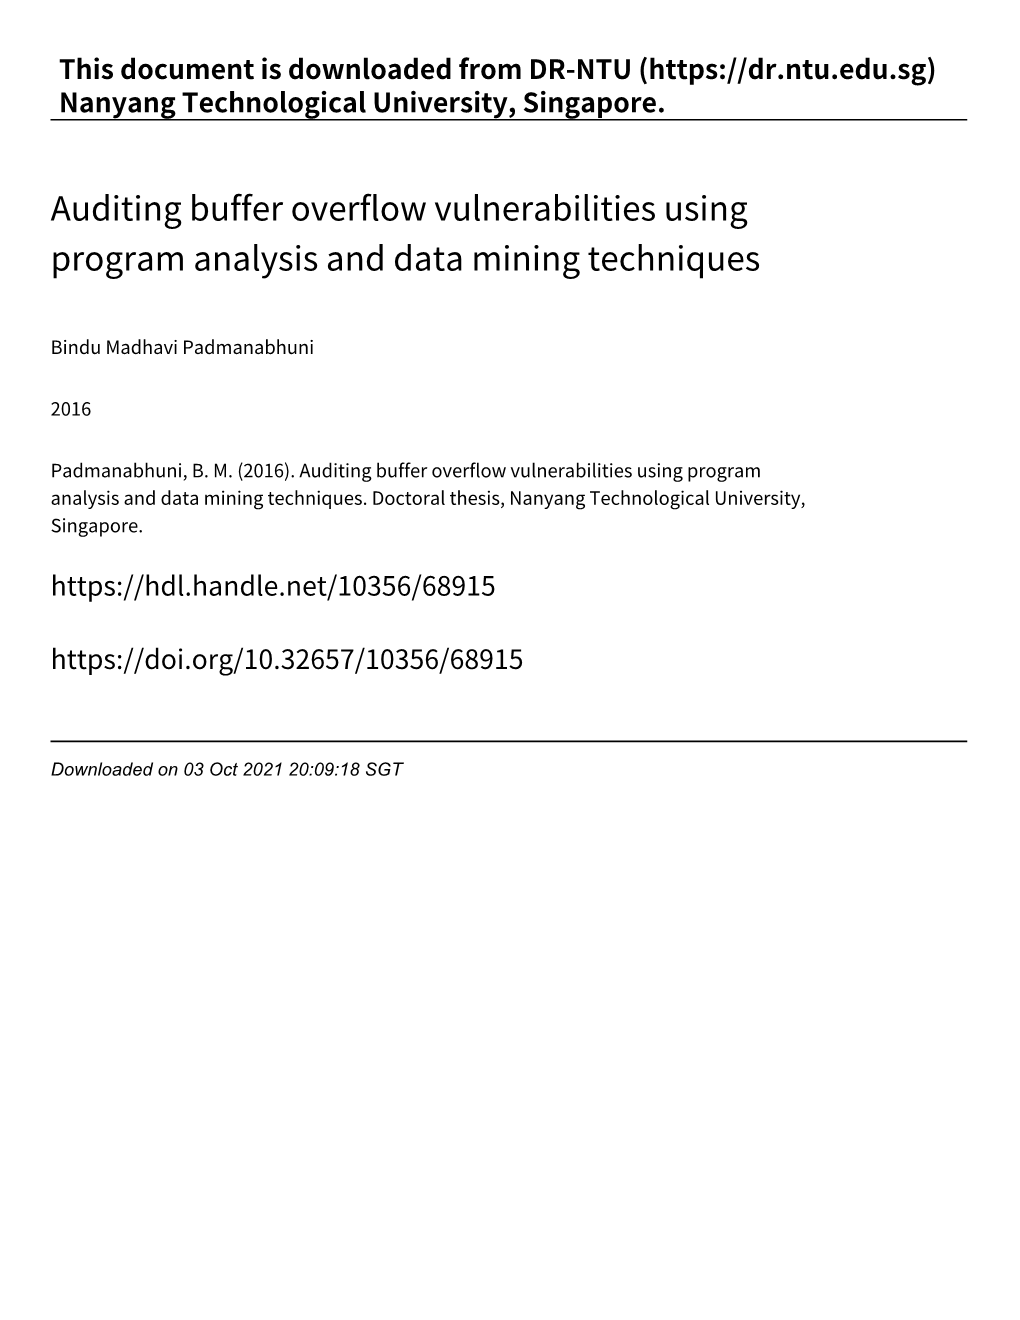 Auditing Buffer Overflow Vulnerabilities Using Program Analysis and Data Mining Techniques